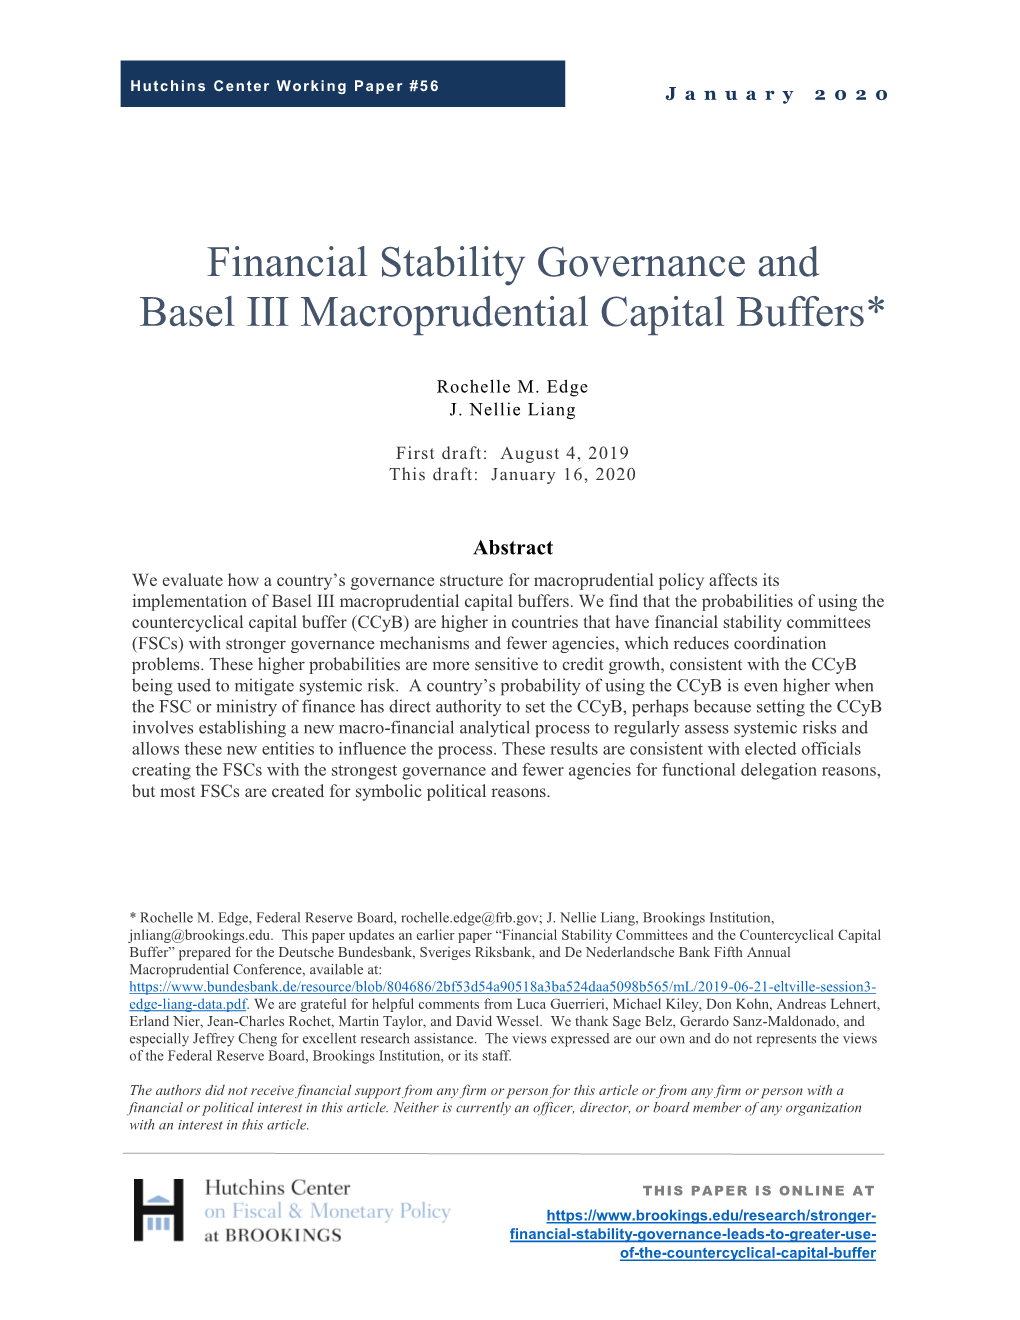 Financial Stability Governance and Basel III Macroprudential Capital Buffers*